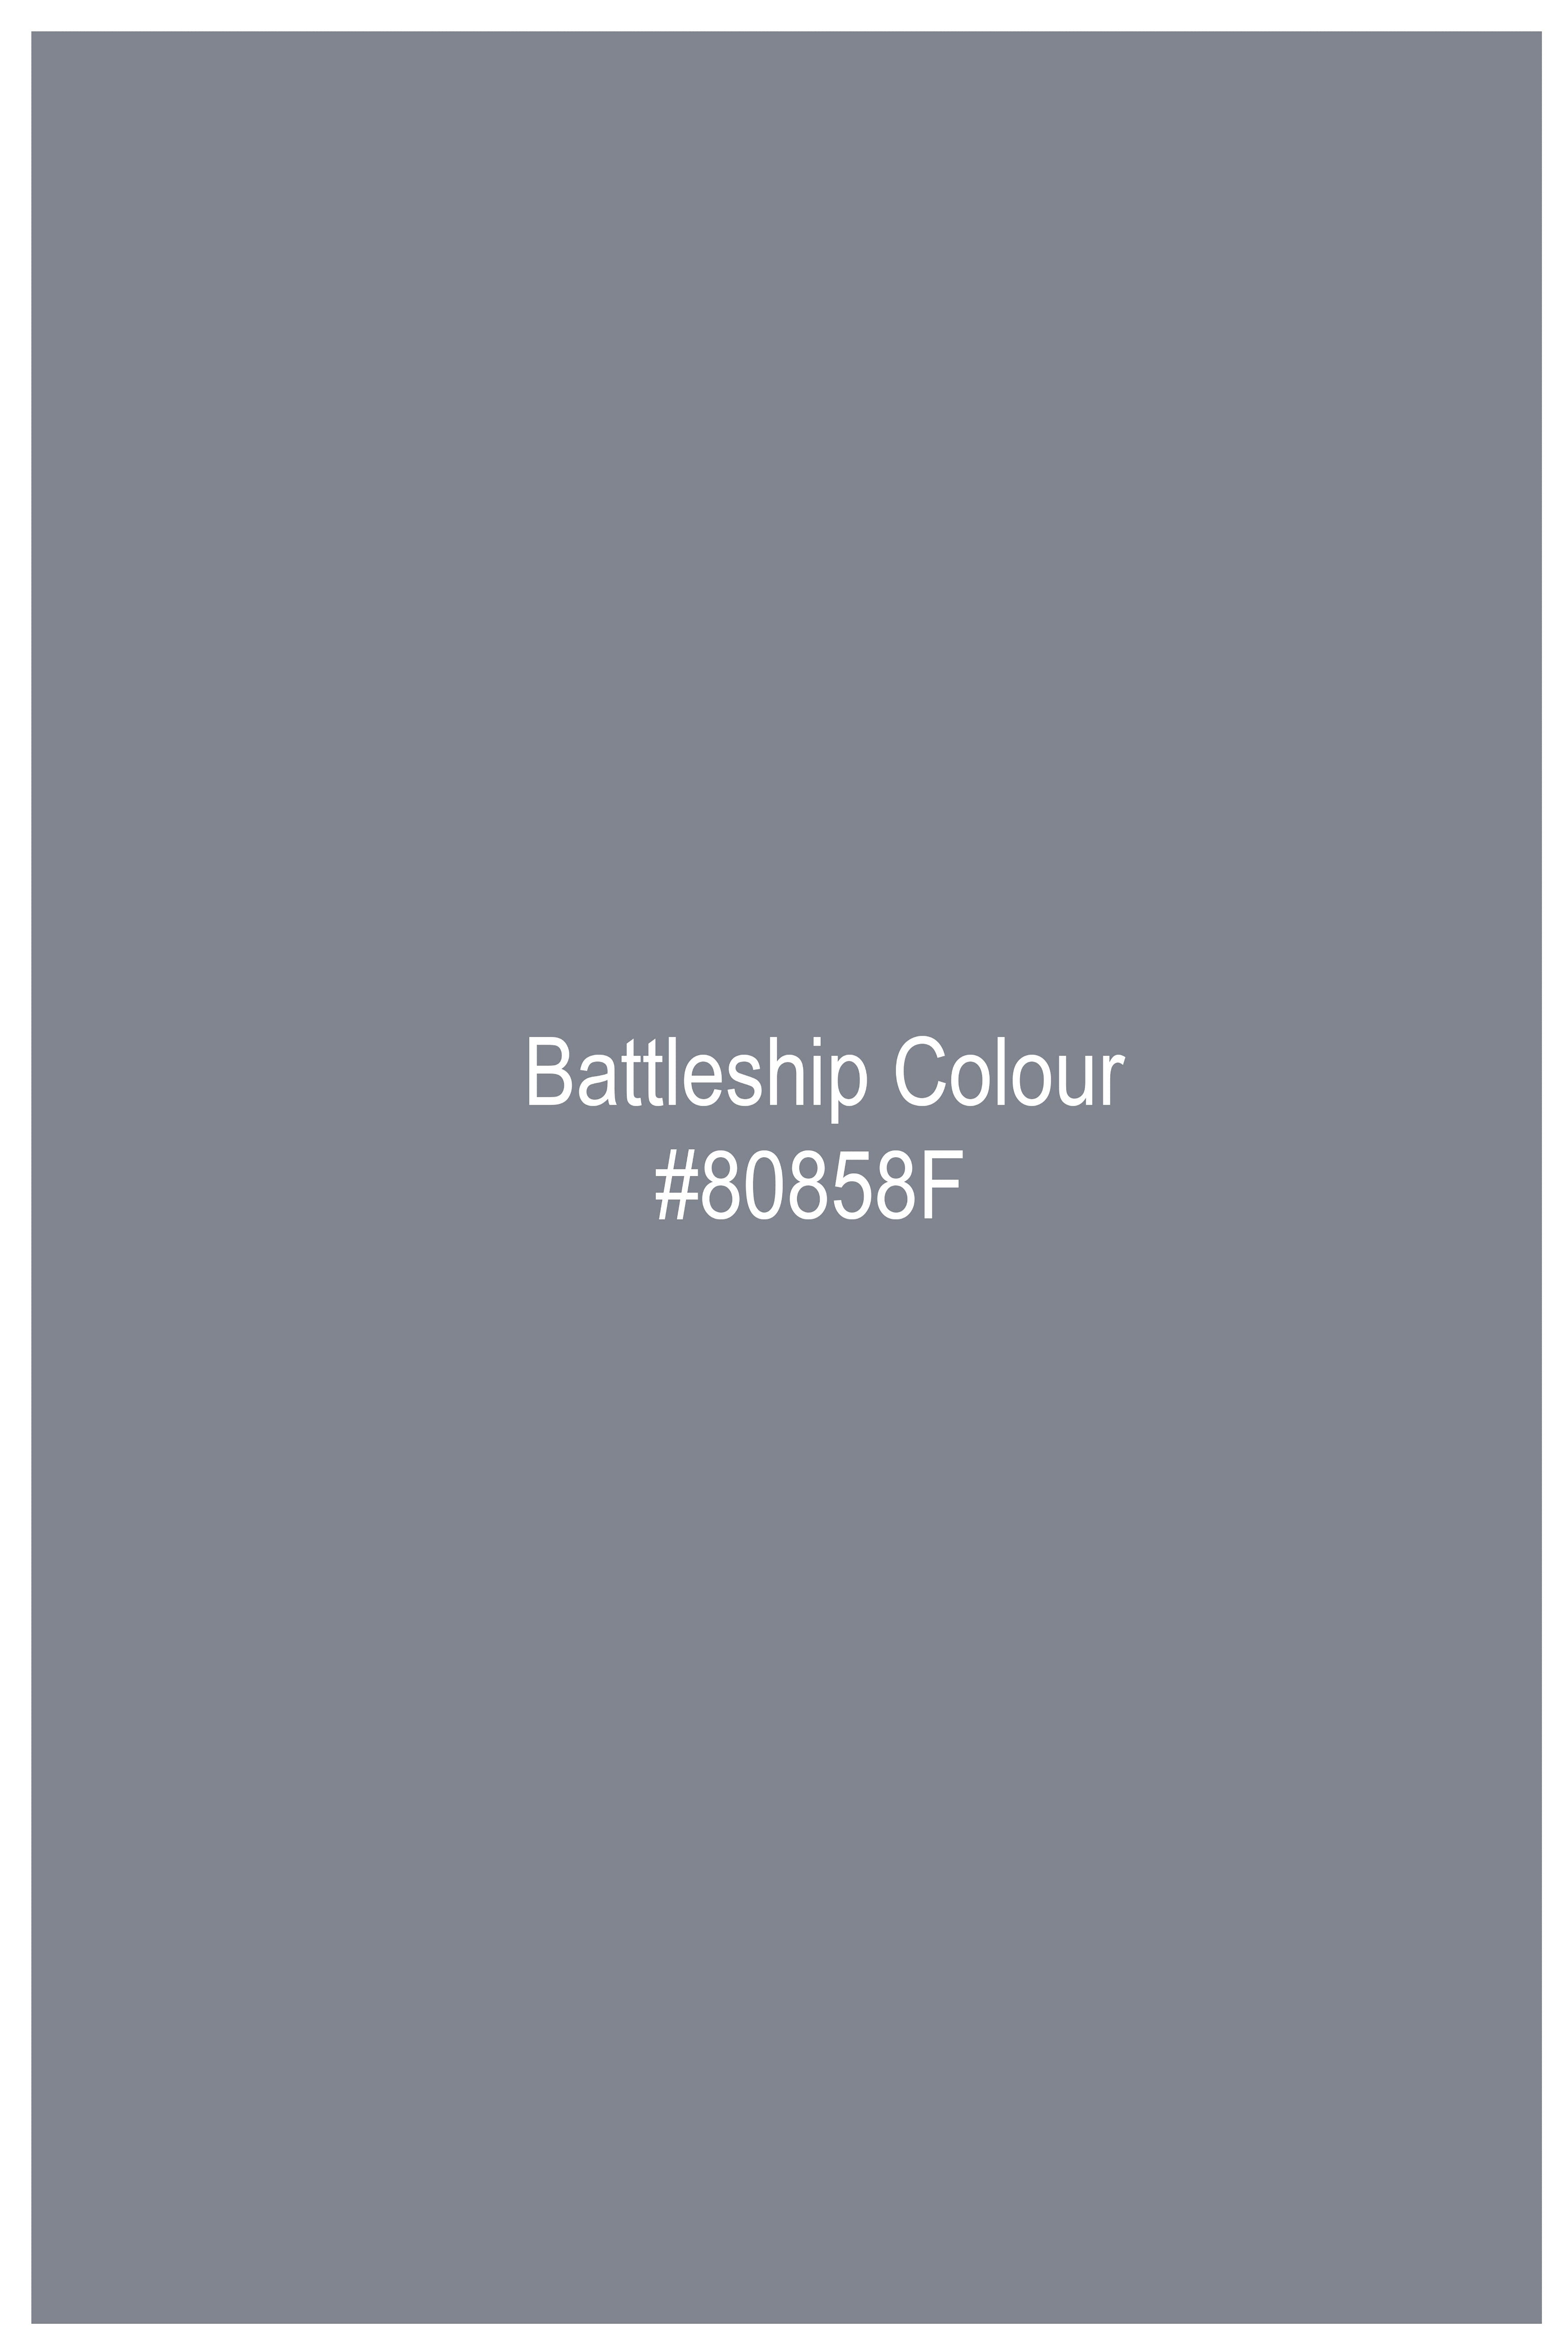 Battleship Gray Hand Painted Flannel Designer Shirt